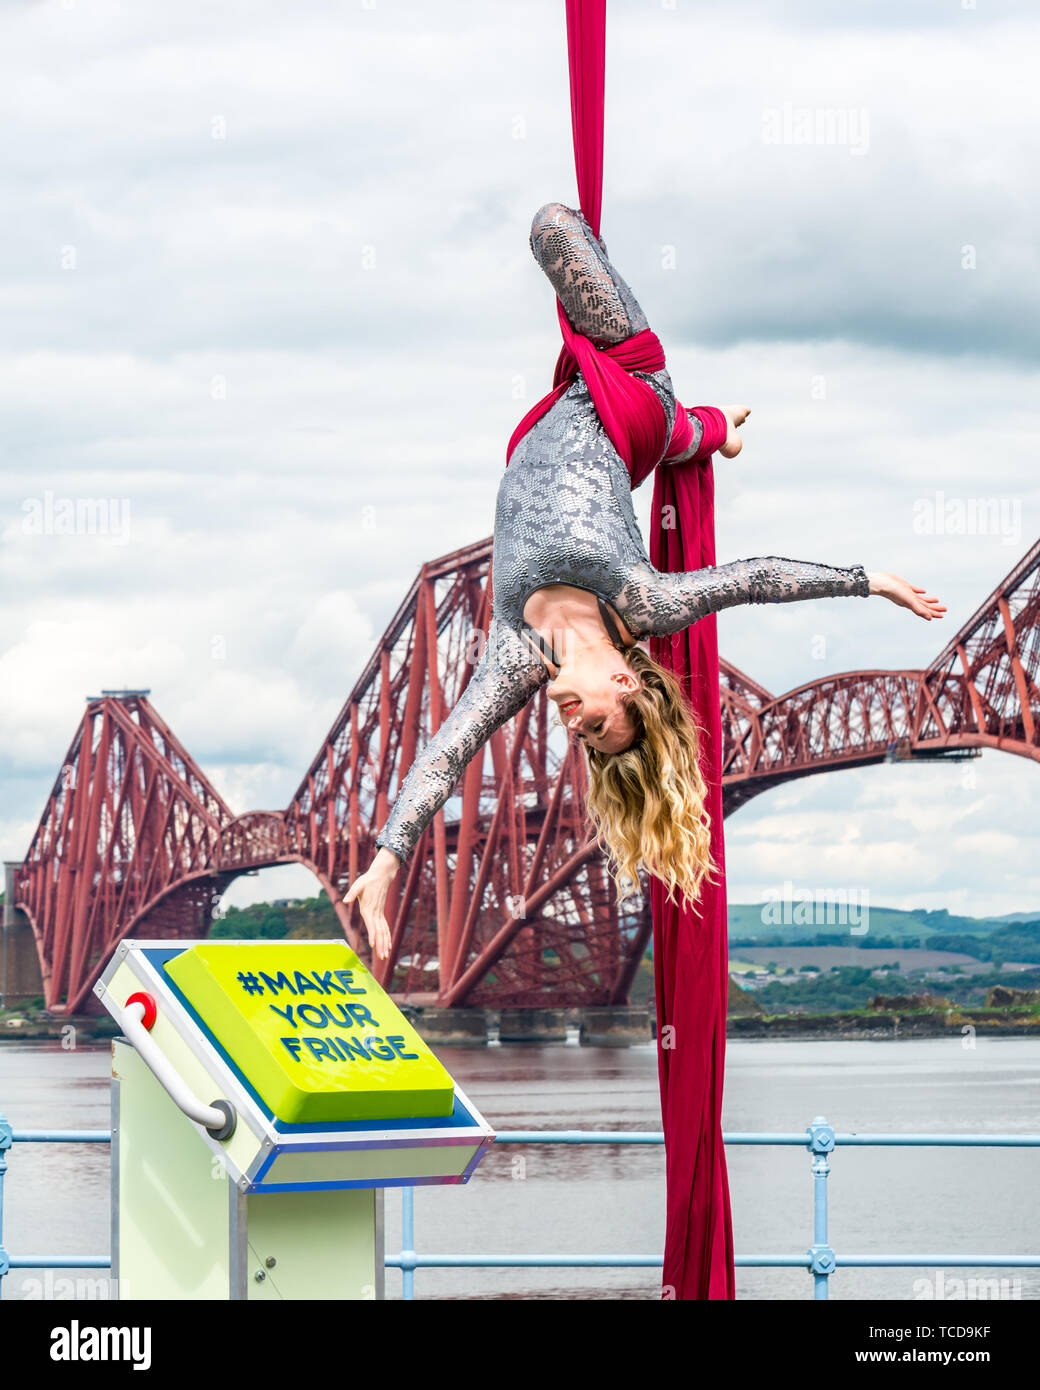 Antenne artist Blaise Donald startet Edinburgh Festival Fringe Programm & Franse Hashtag #MakeYourFringe an iconic Forth Rail Bridge, Schottland, Großbritannien Stockfoto